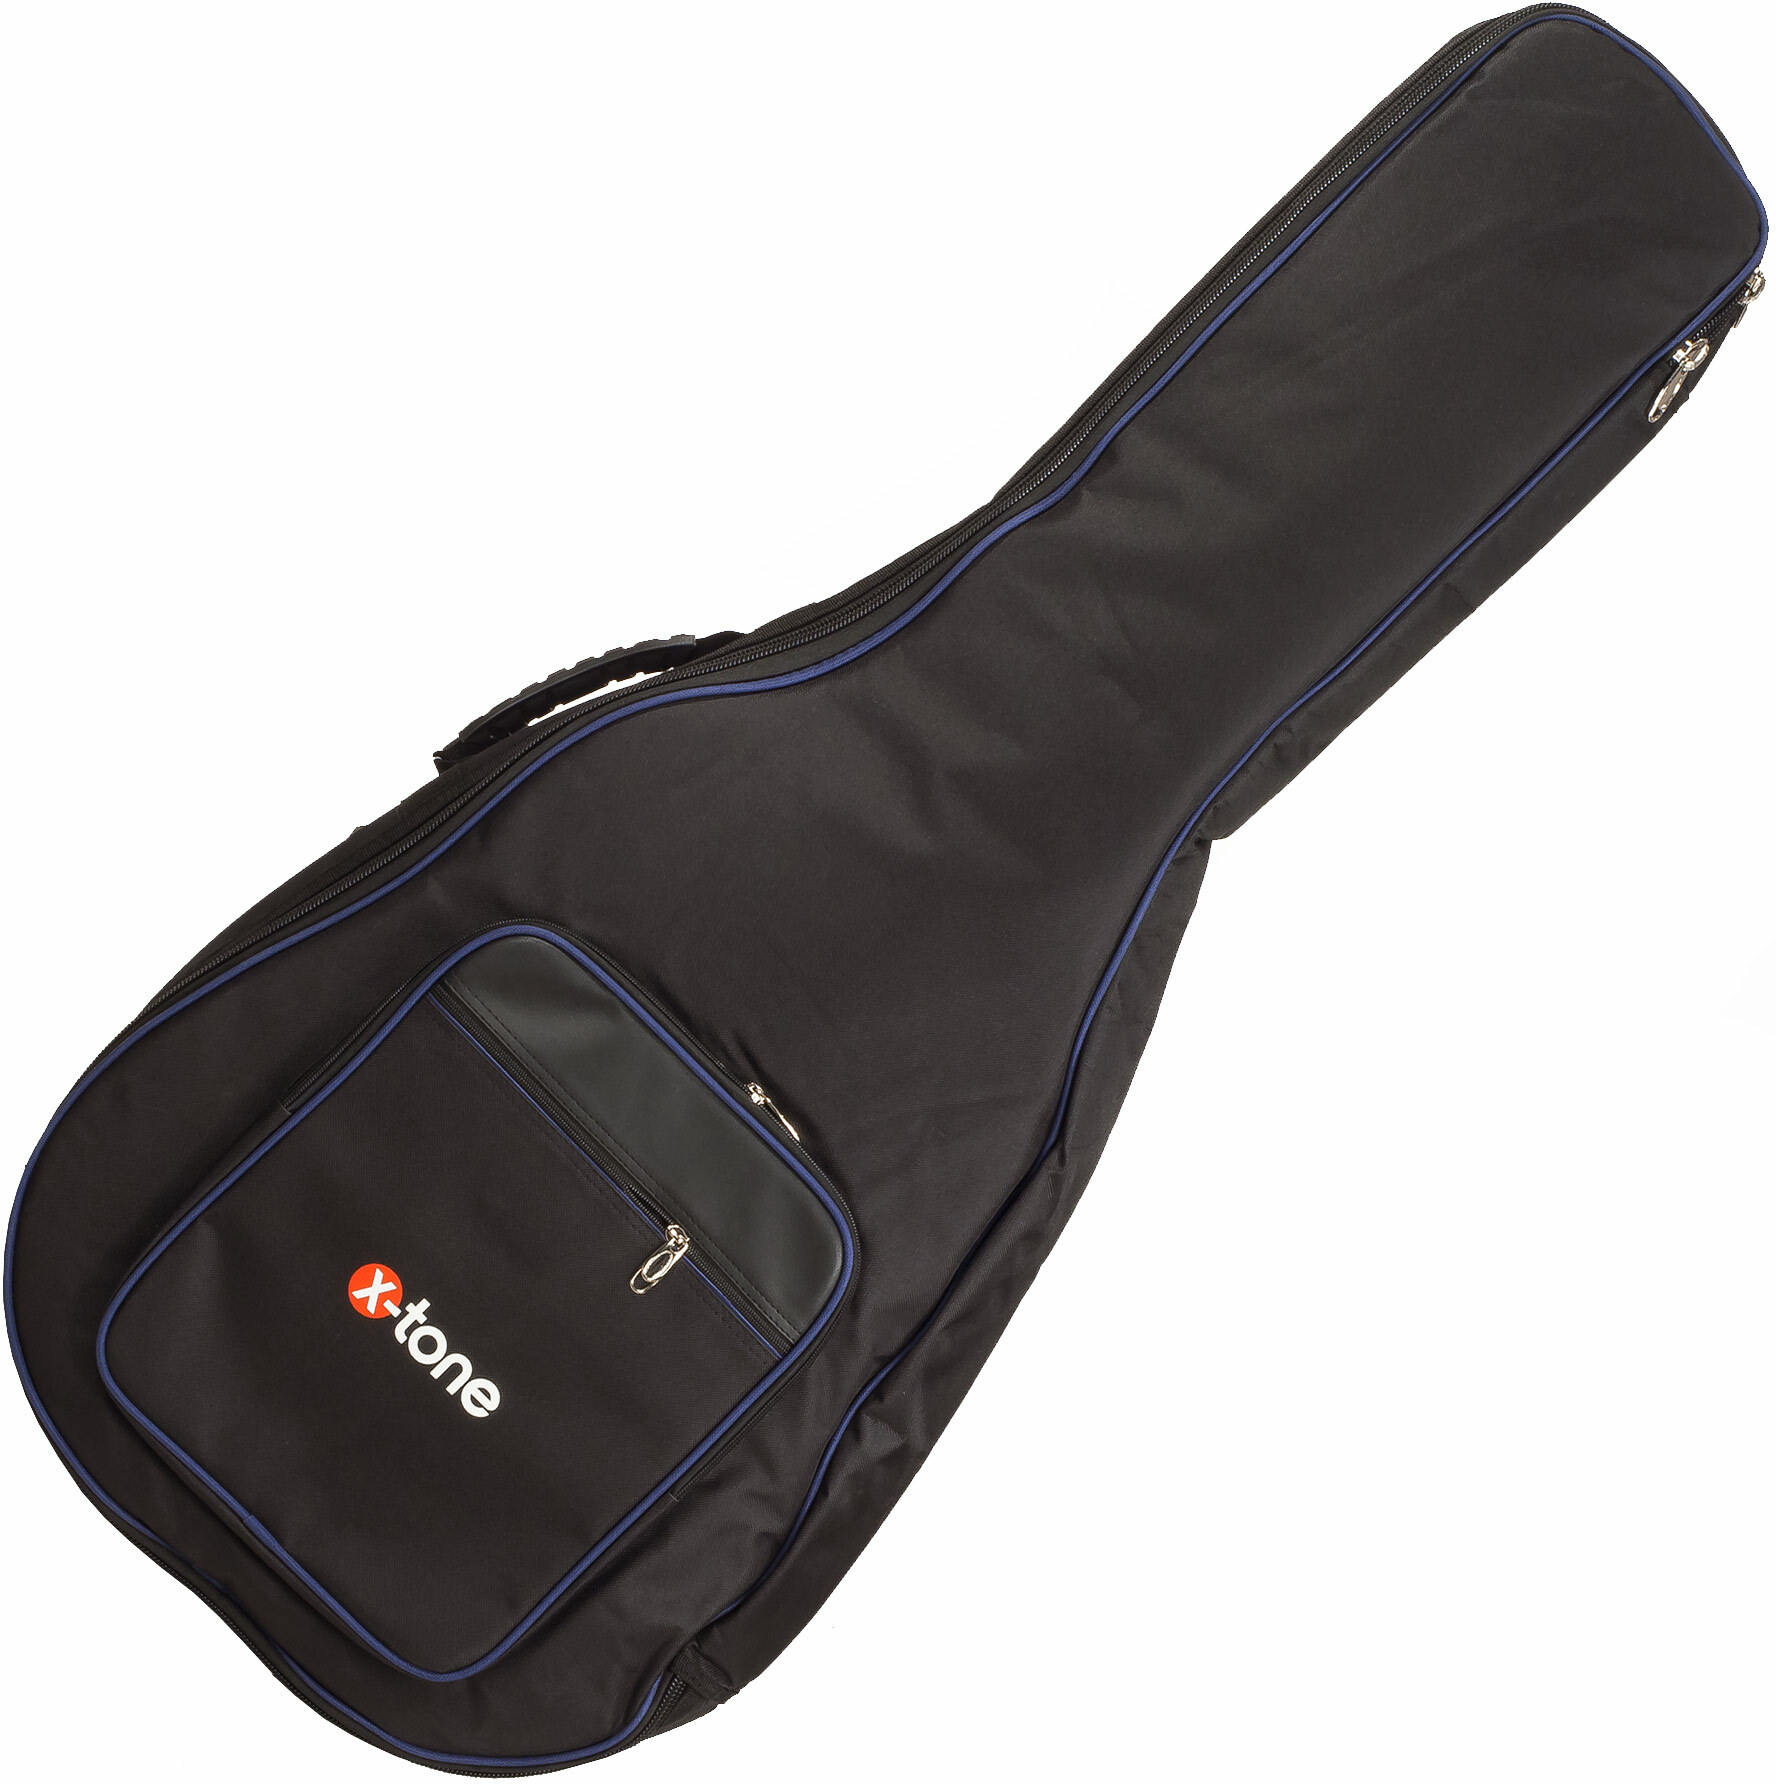 X-tone 2015 Cla44-bk Nylon 15mm Classical 4/4 Guitar Bag Black (2010) - Classic guitar gig bag - Main picture